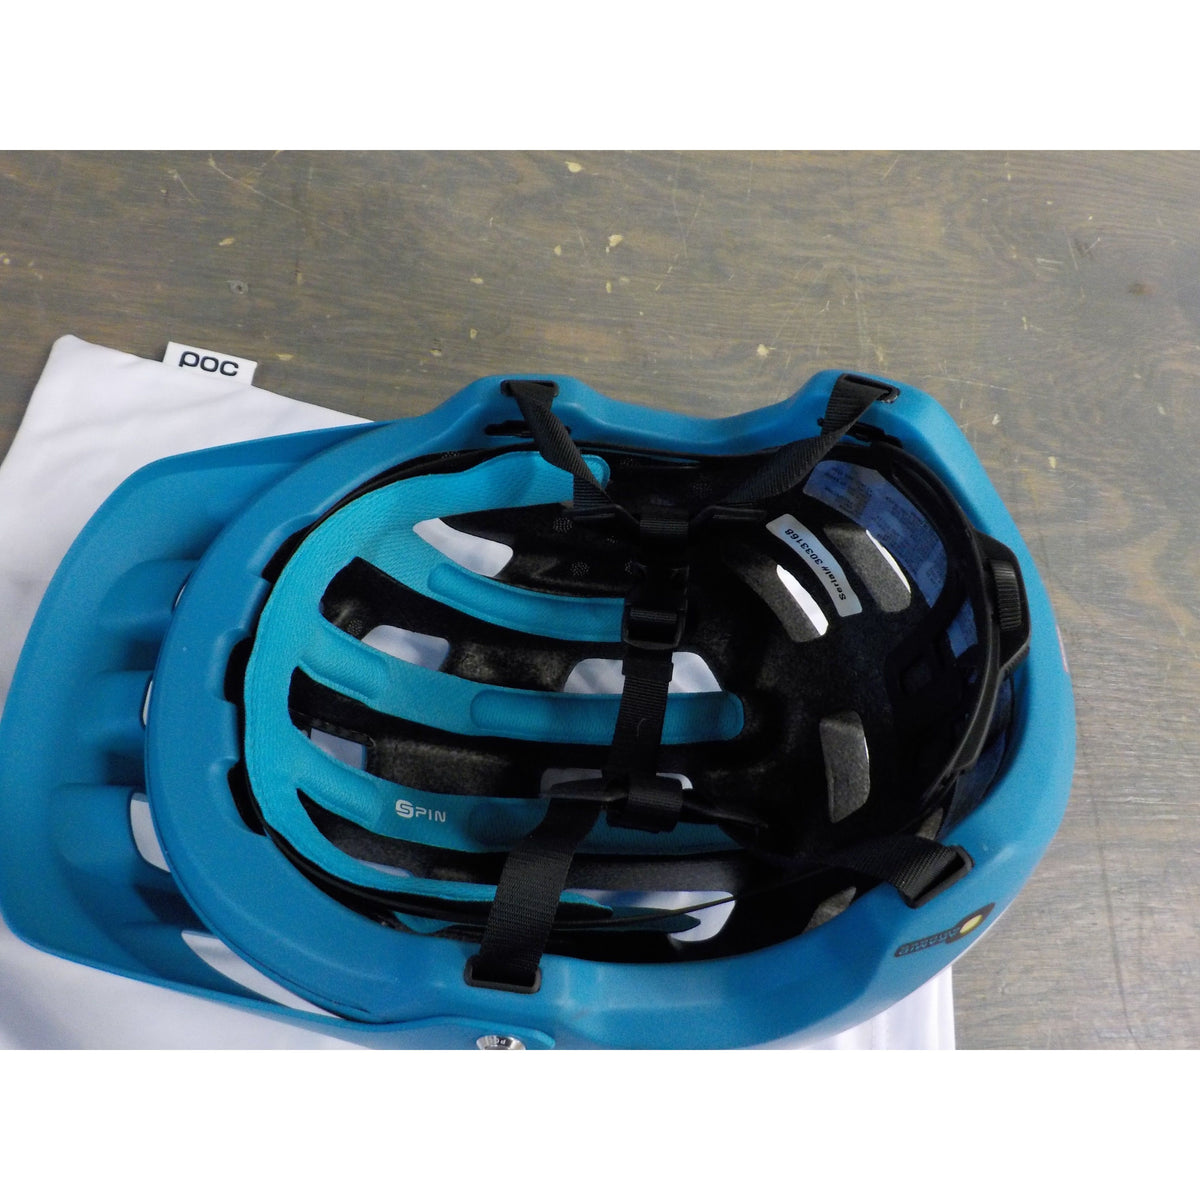 POC Sports Tectal Race Spin Helmet - Basalt Blue/Hydrogen White Matt - X-L/XX-L - Used - Acceptable